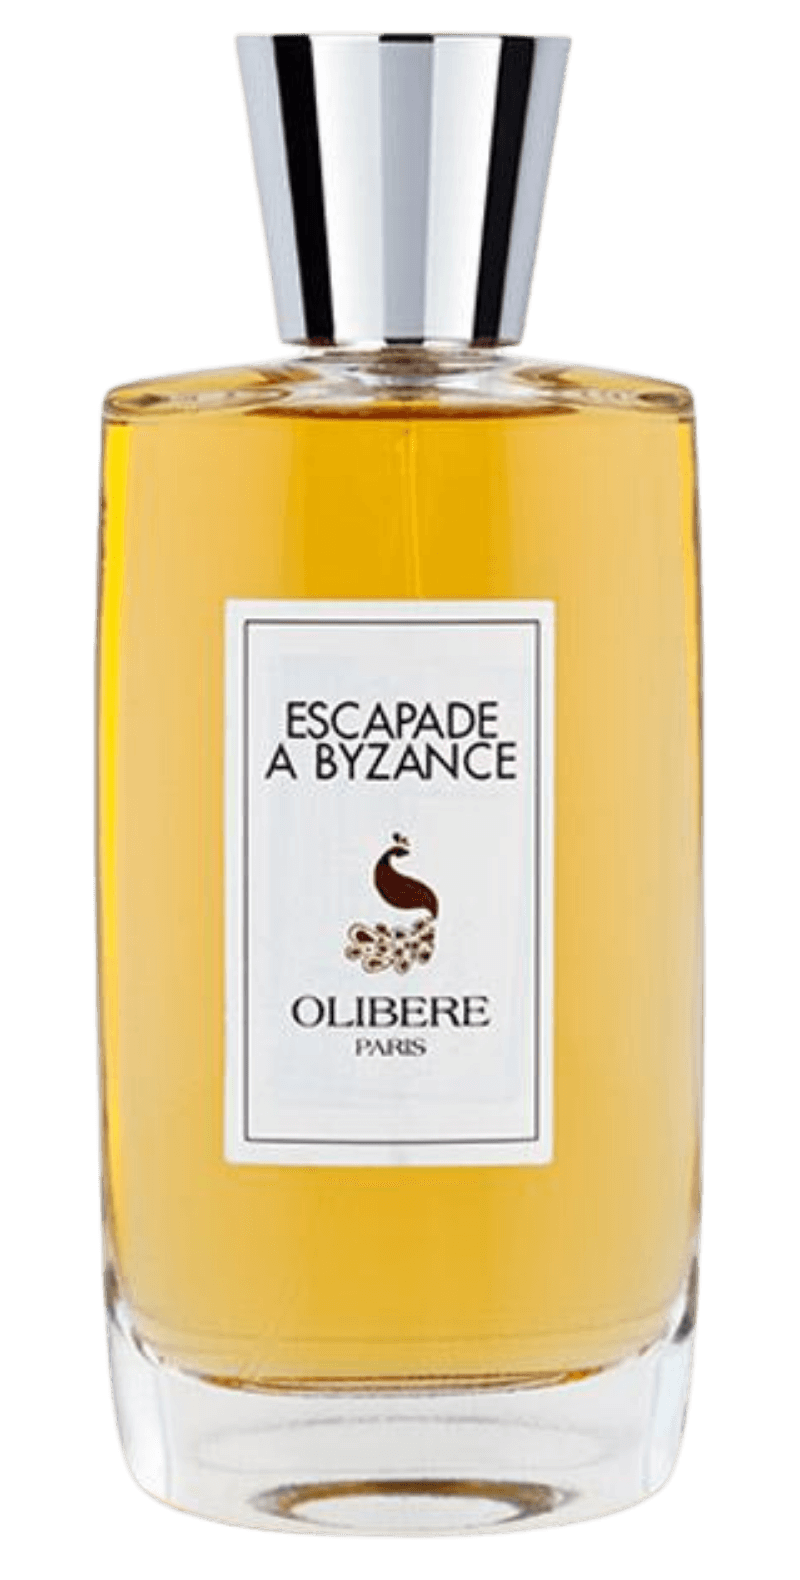 's Olibere Escapade a Byzance - Bellini's Skin and Parfumerie 